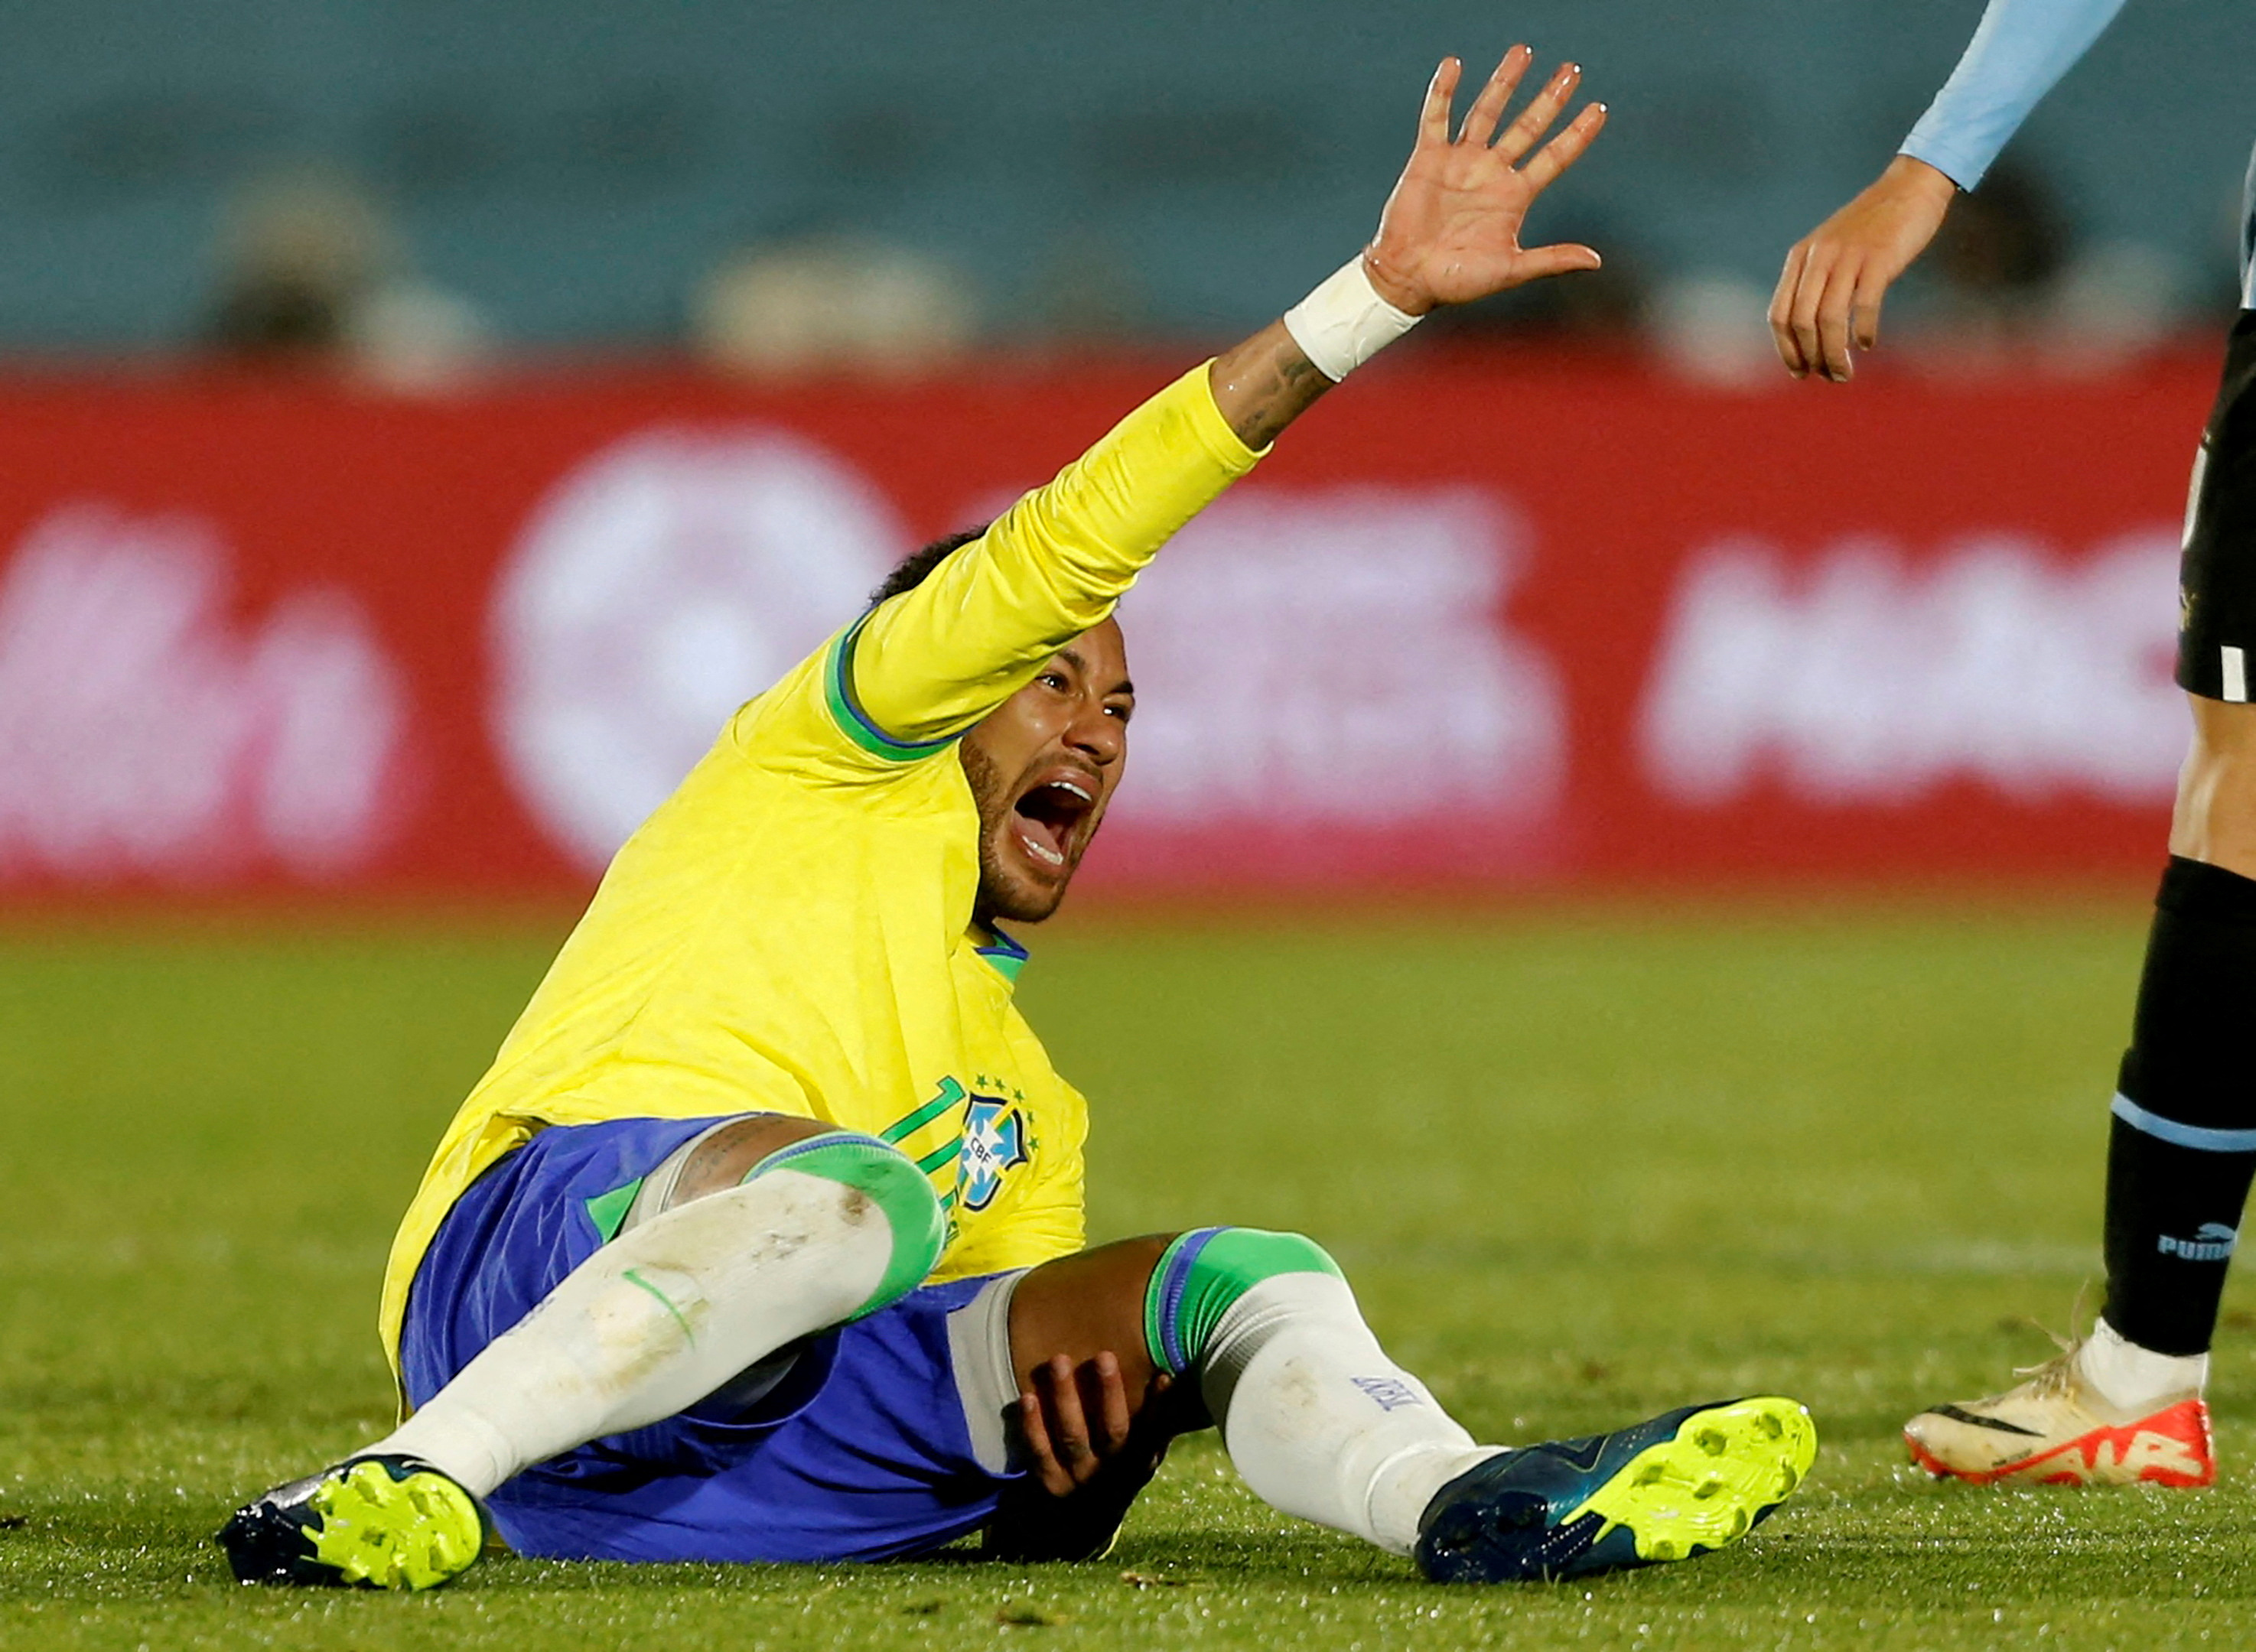 Injured Neymar to miss Copa America, says Brazil team doctor | Reuters